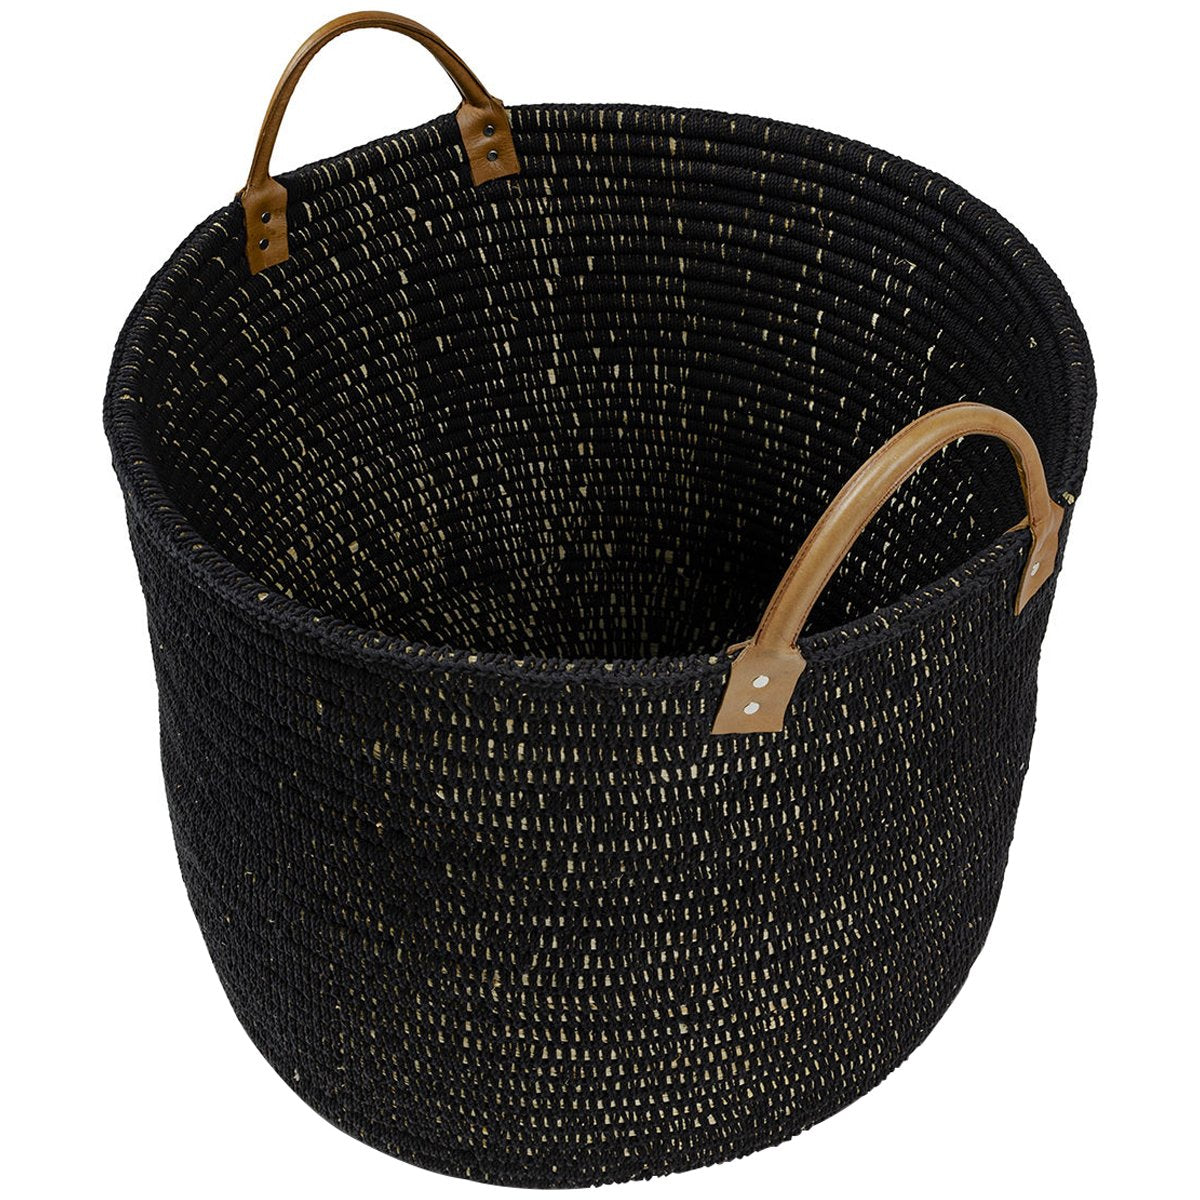 Palecek Cairo Planter Basket